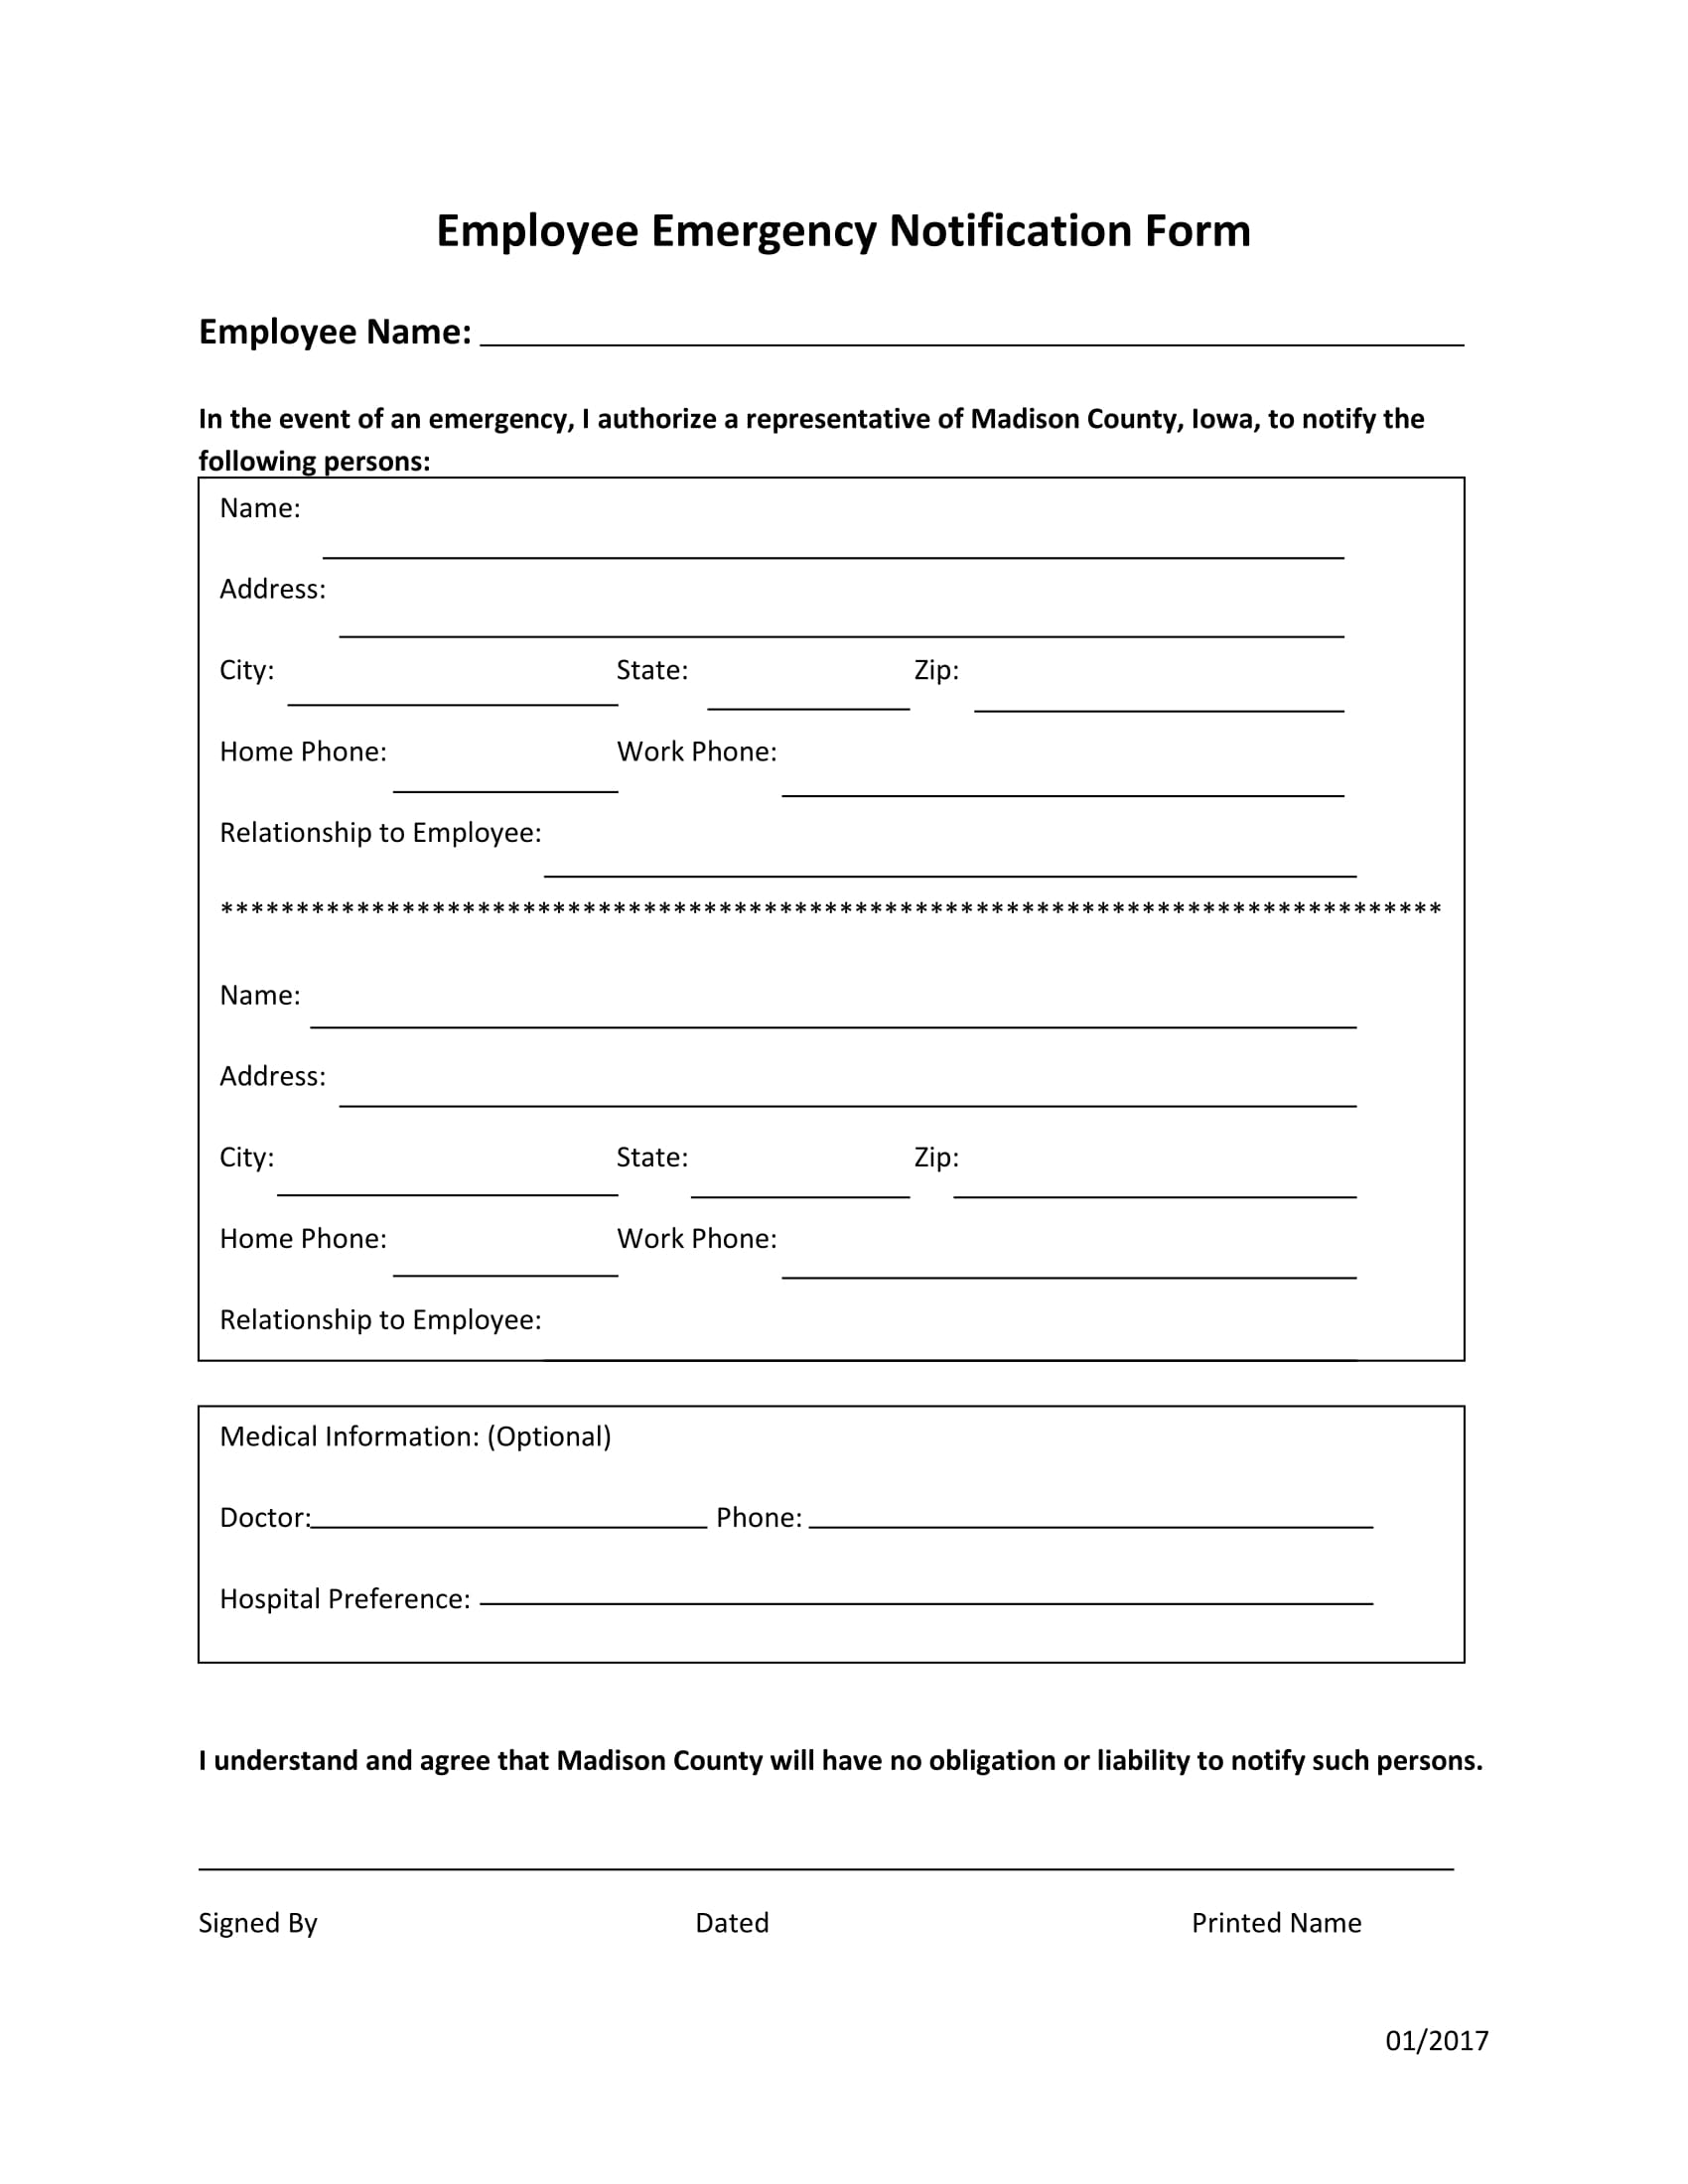 county employee emergency notification form 1